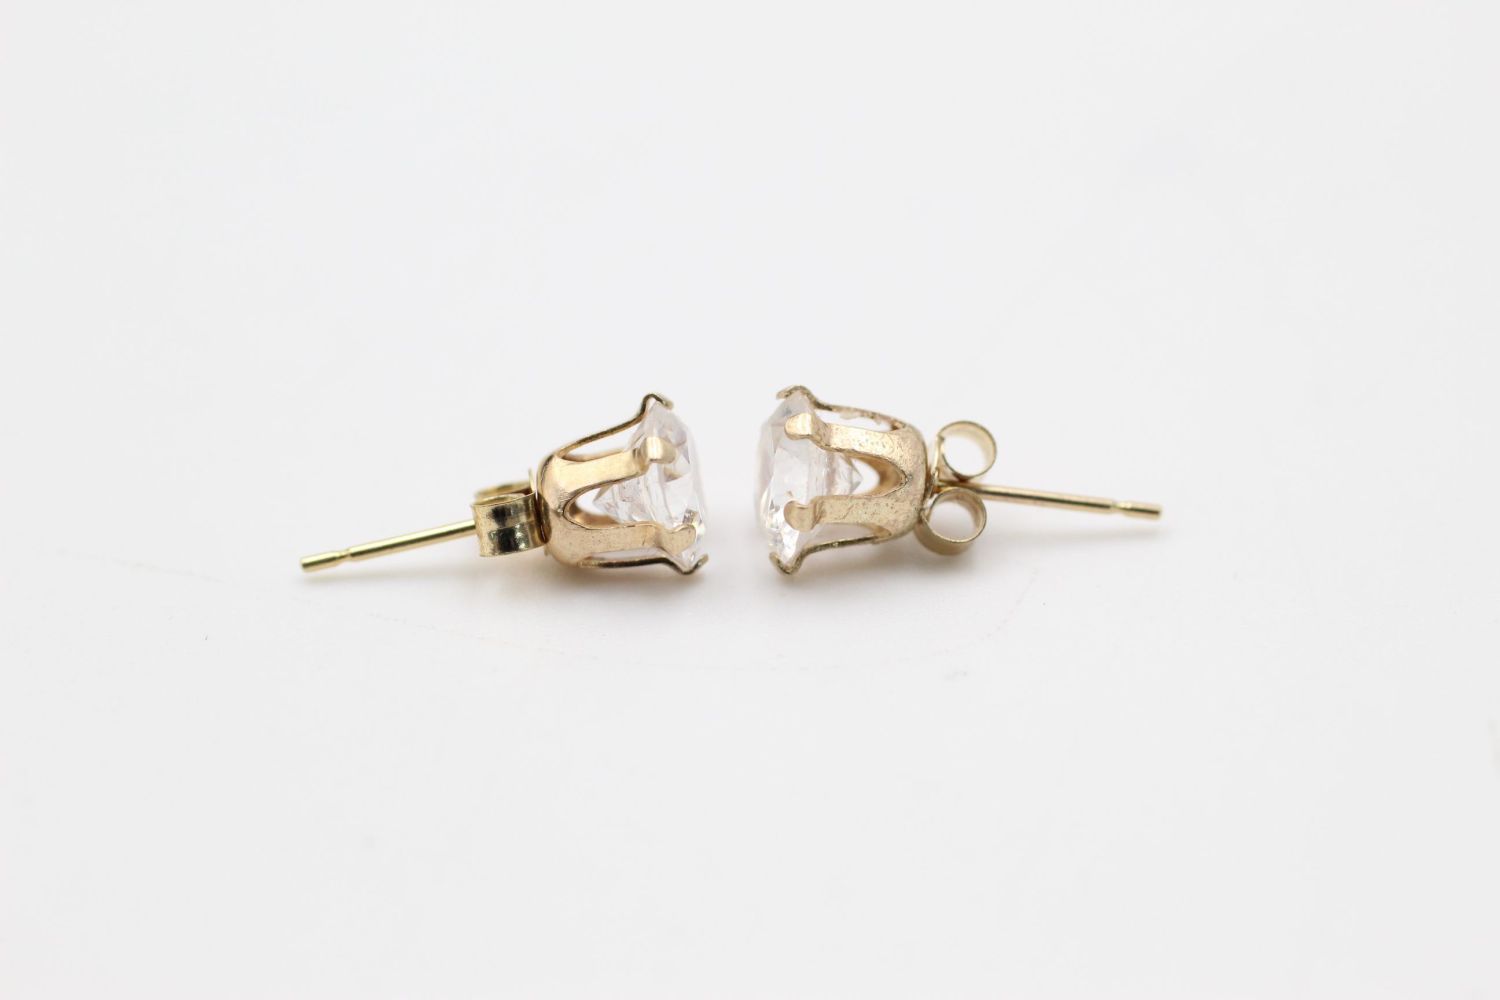 3 x 9ct gold gemstone stud earrings 3 grams gross - Image 3 of 7